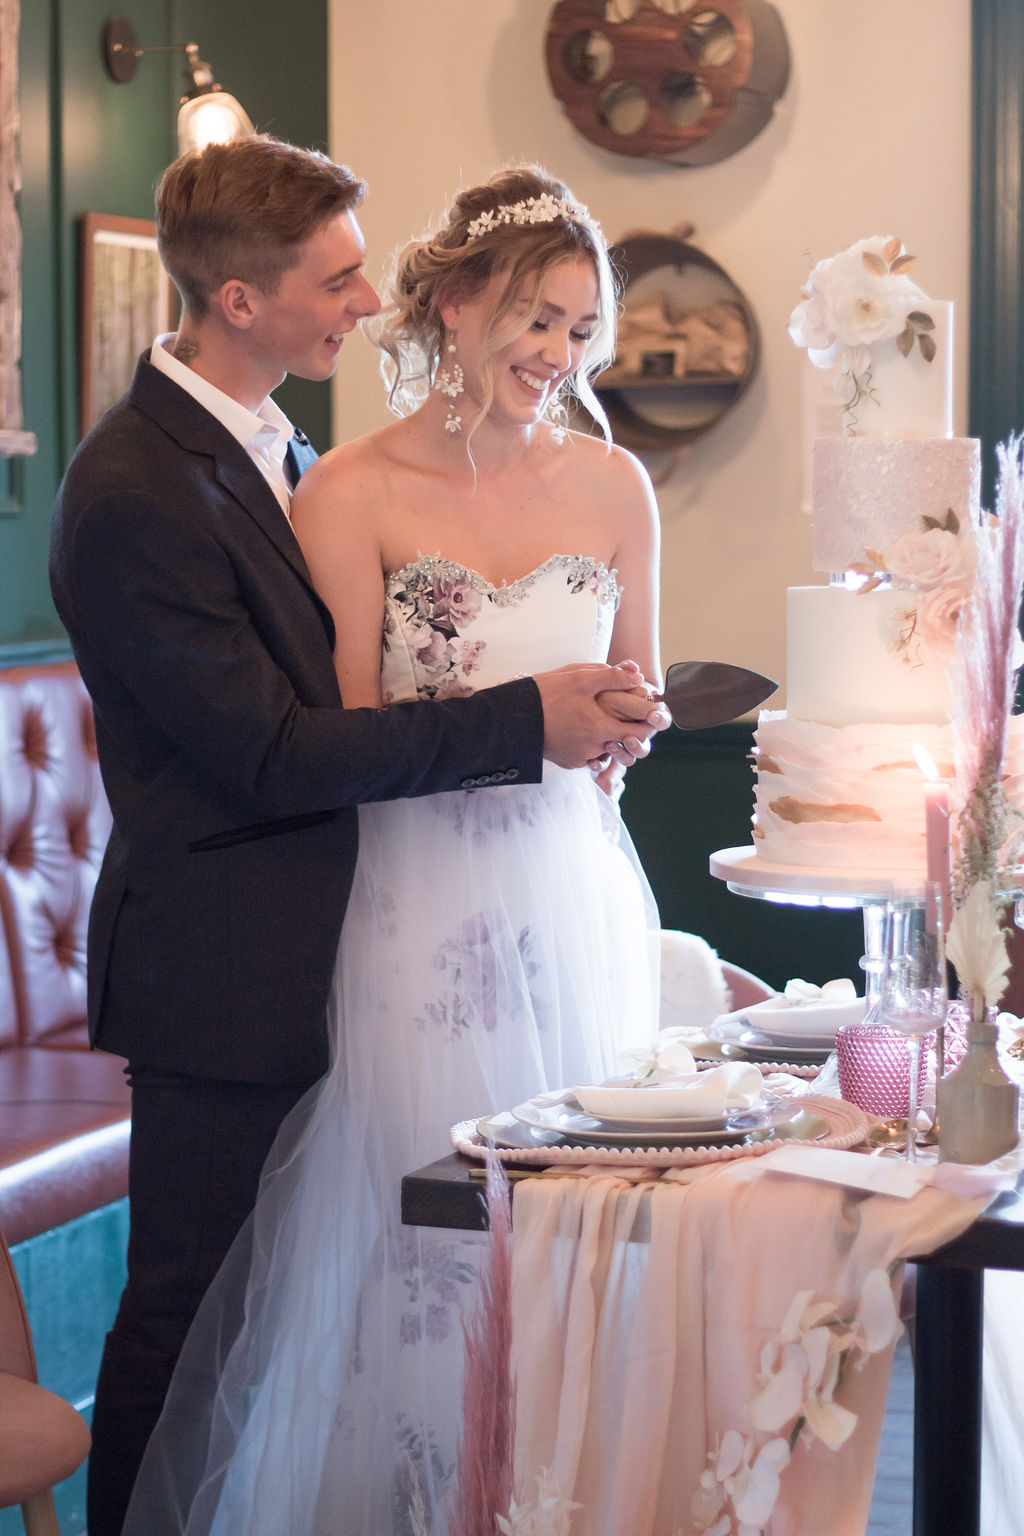 Dreamy Blush Wedding With Bespoke Floral Dress at Newmillerdam Yorkshire